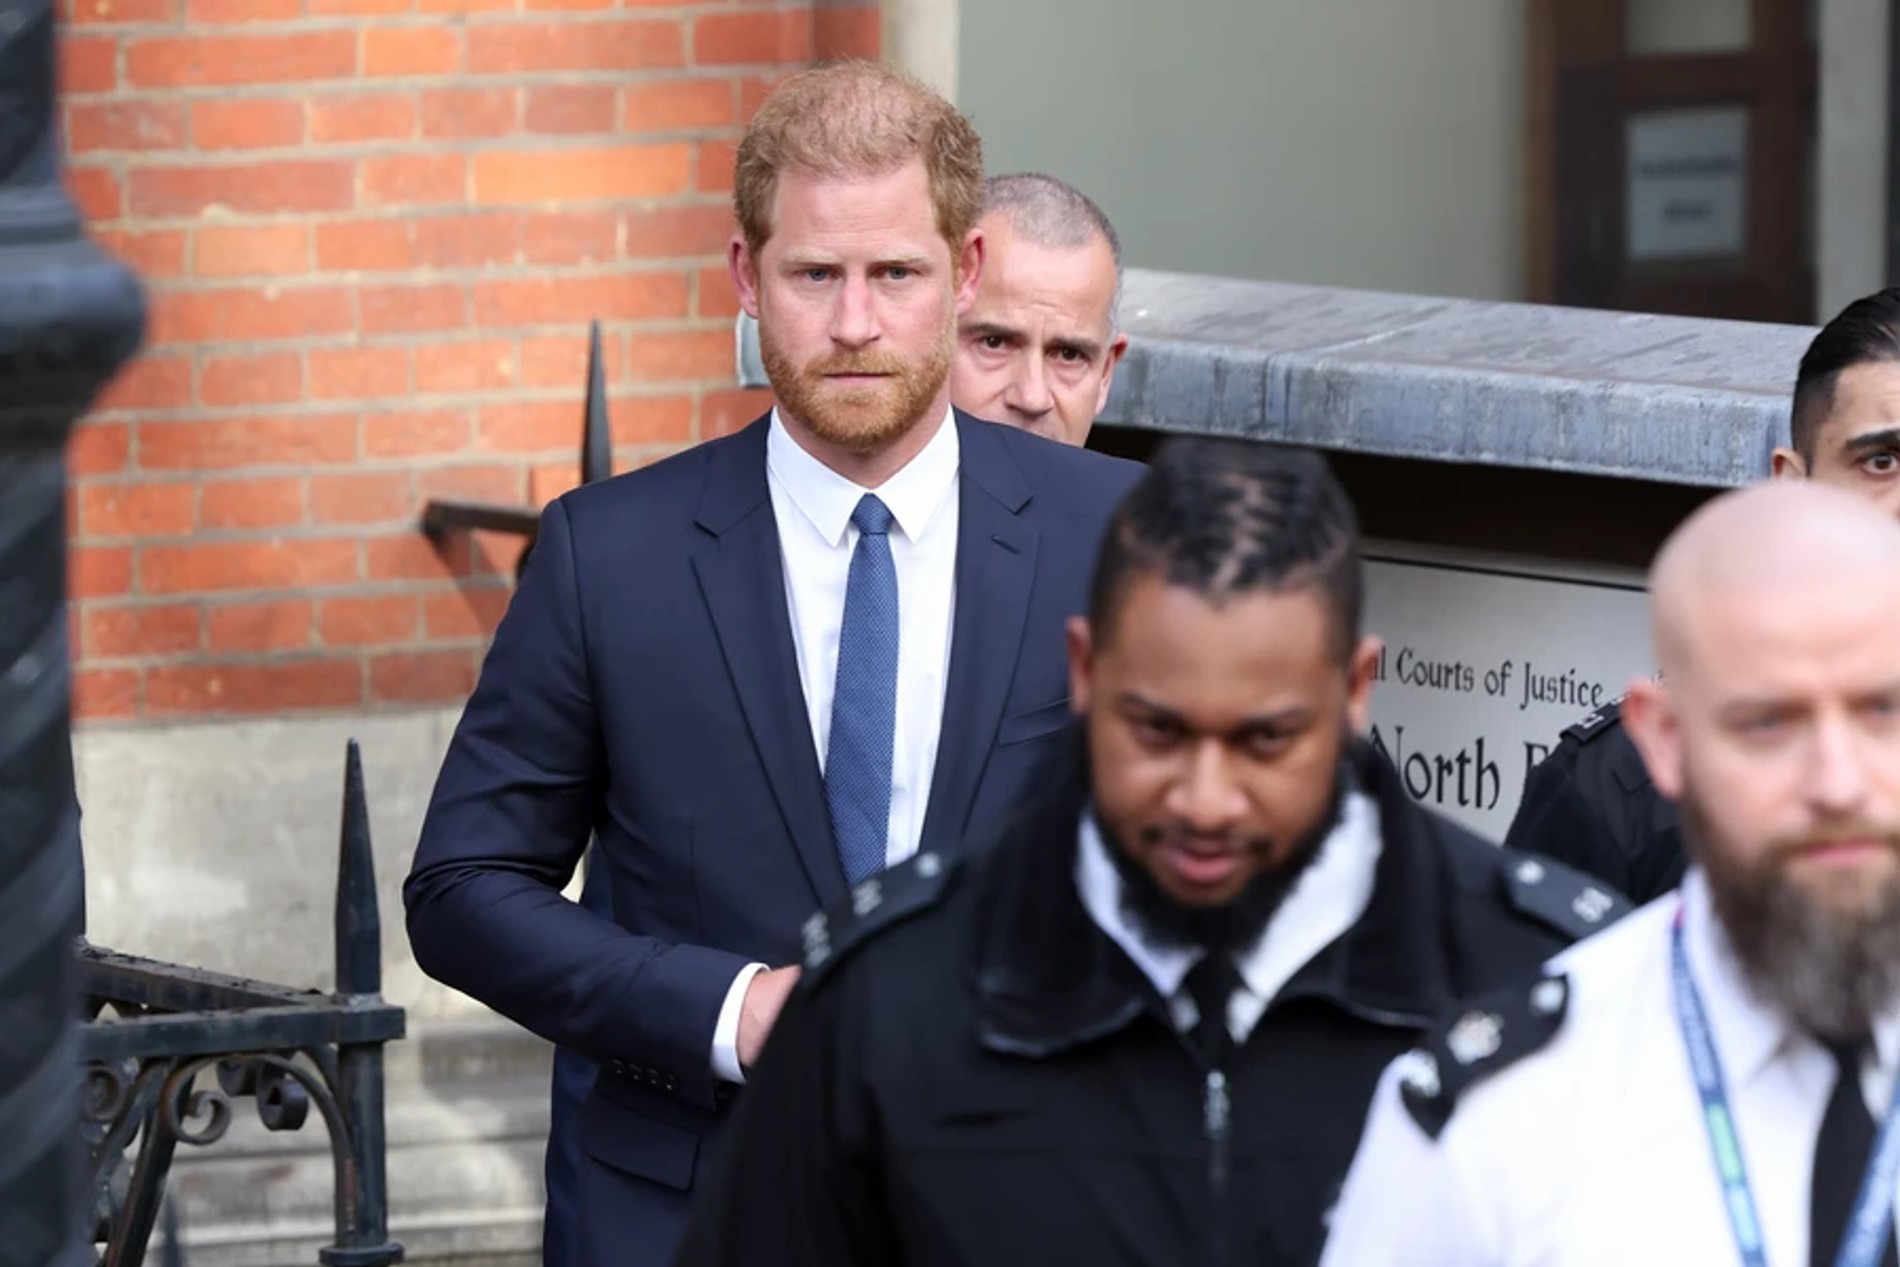 Принц Гарри возле здания суда в Лондоне
Фото: Getty Images